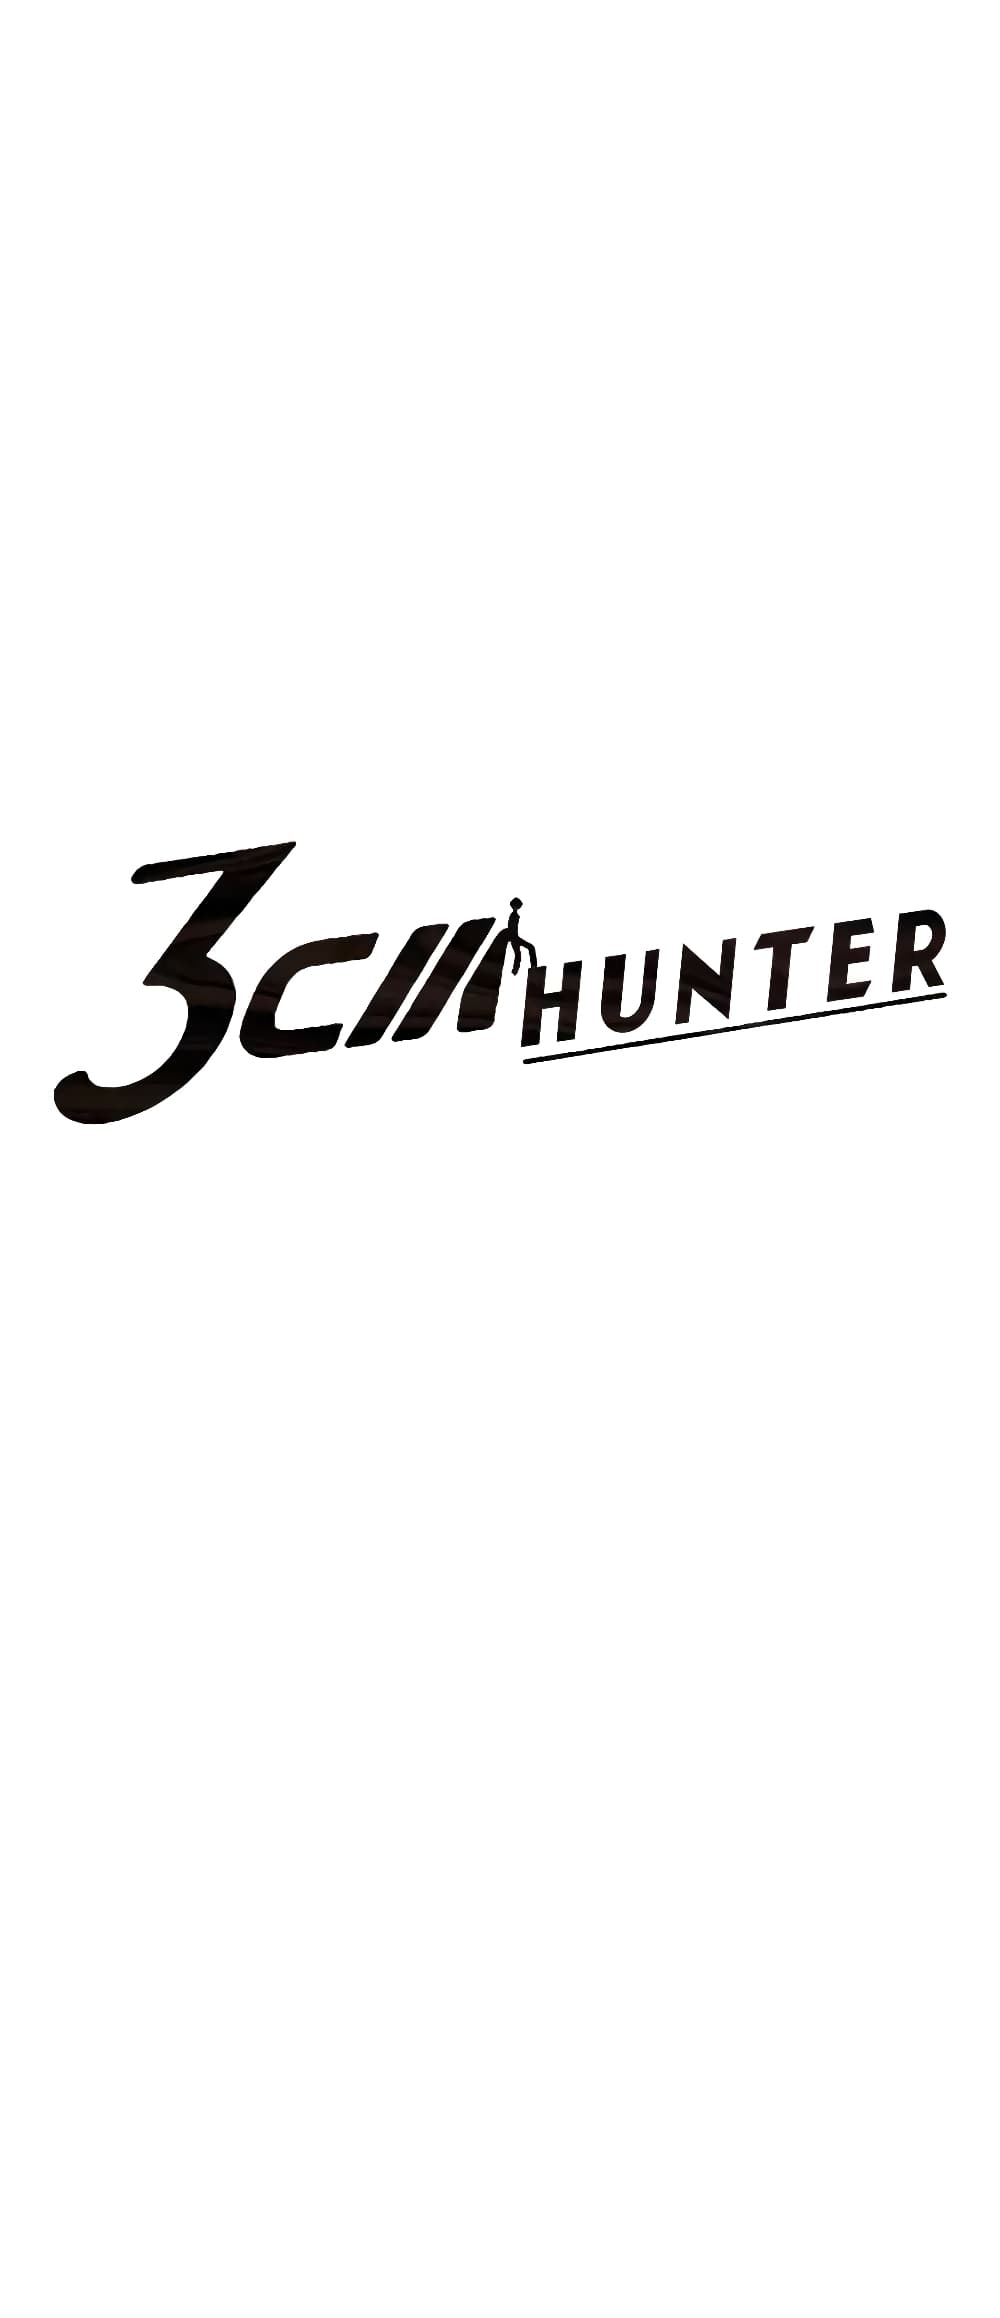 3CM Hunter ตอนที่ 5 (5)